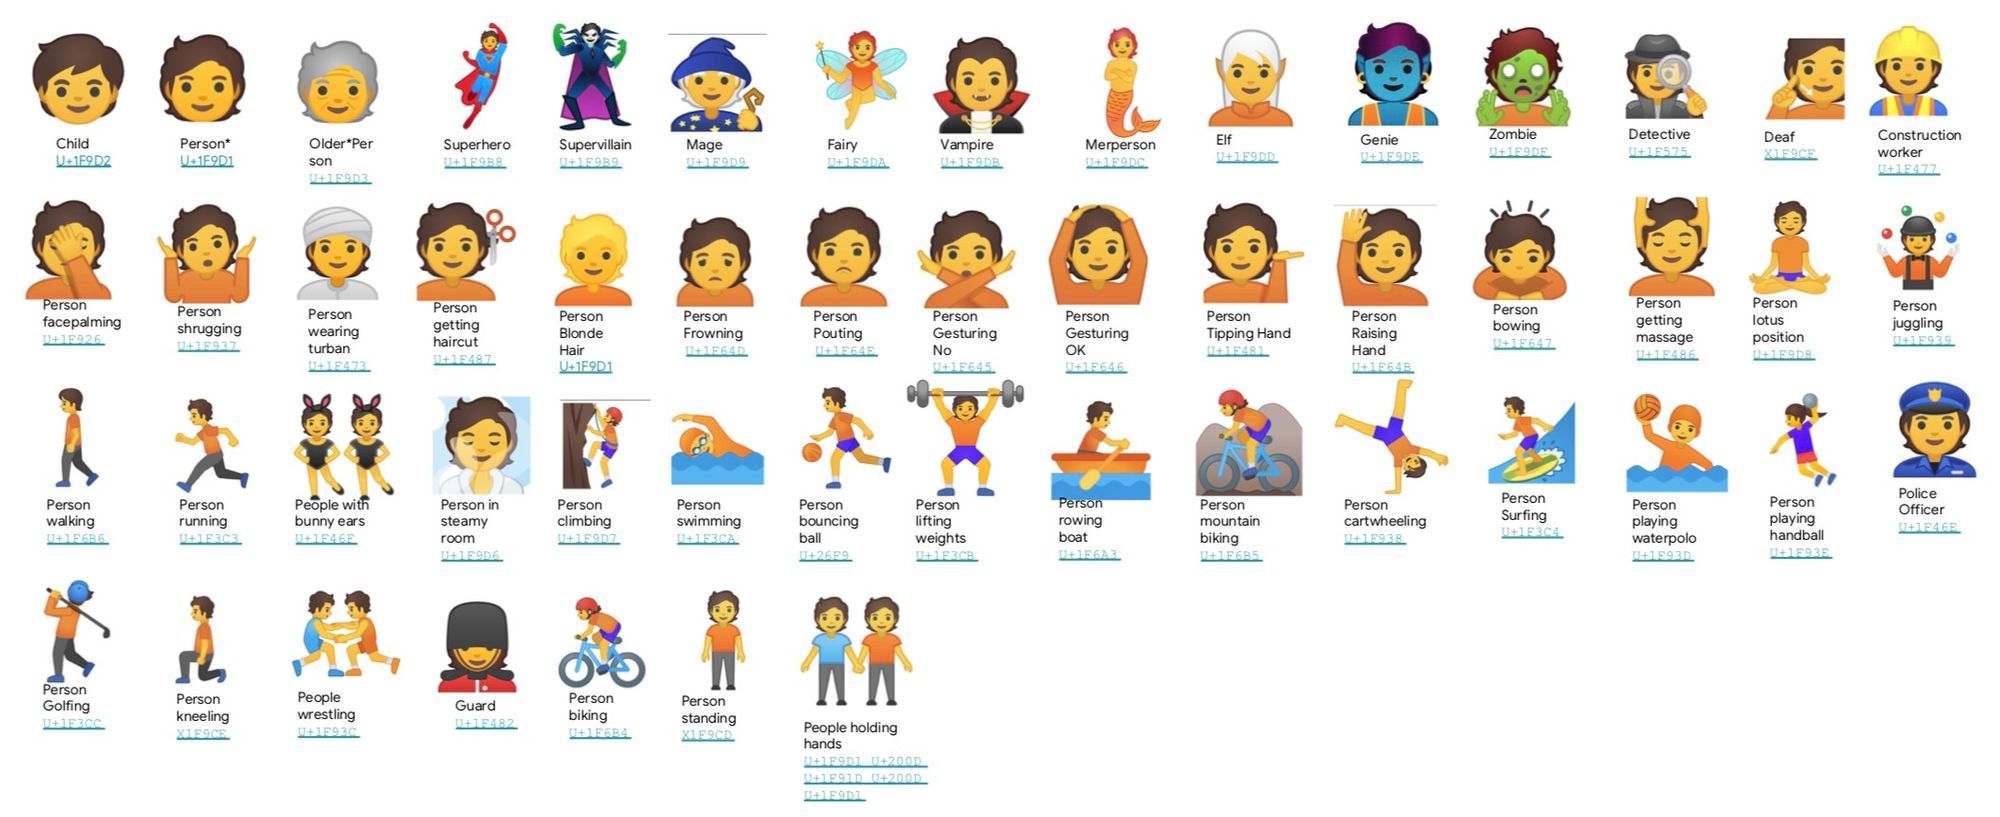 google-gender-inclusive-emojis-2019-1